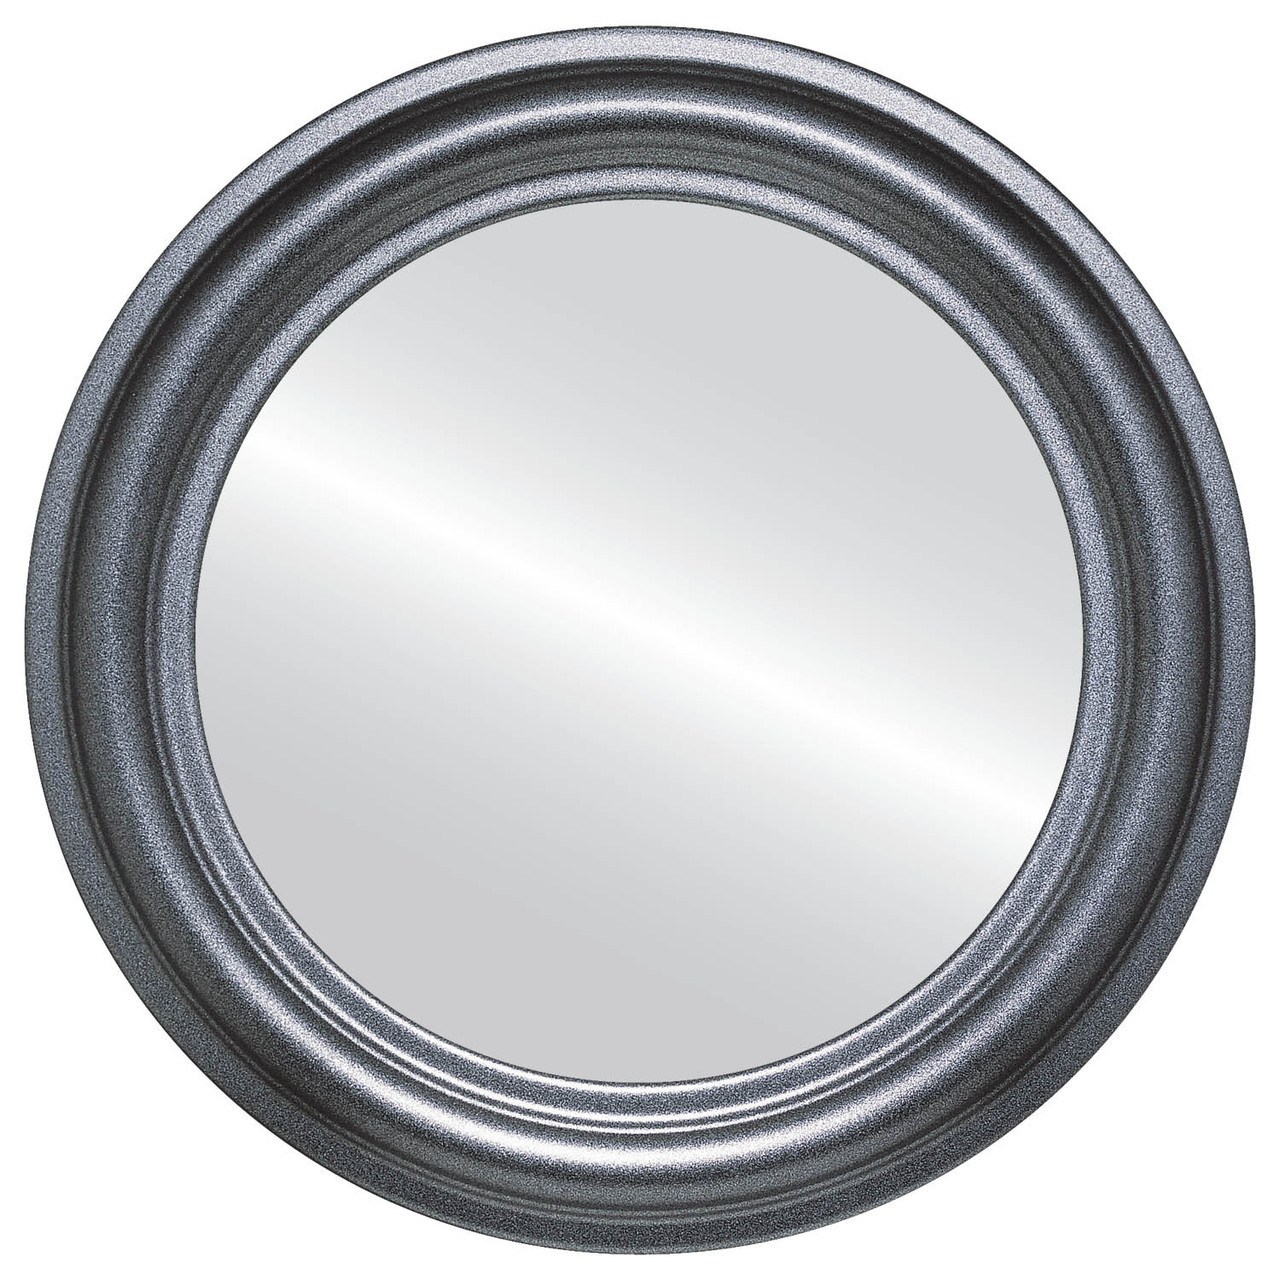 Philadelphia Framed Round Mirror - Champagne Silver